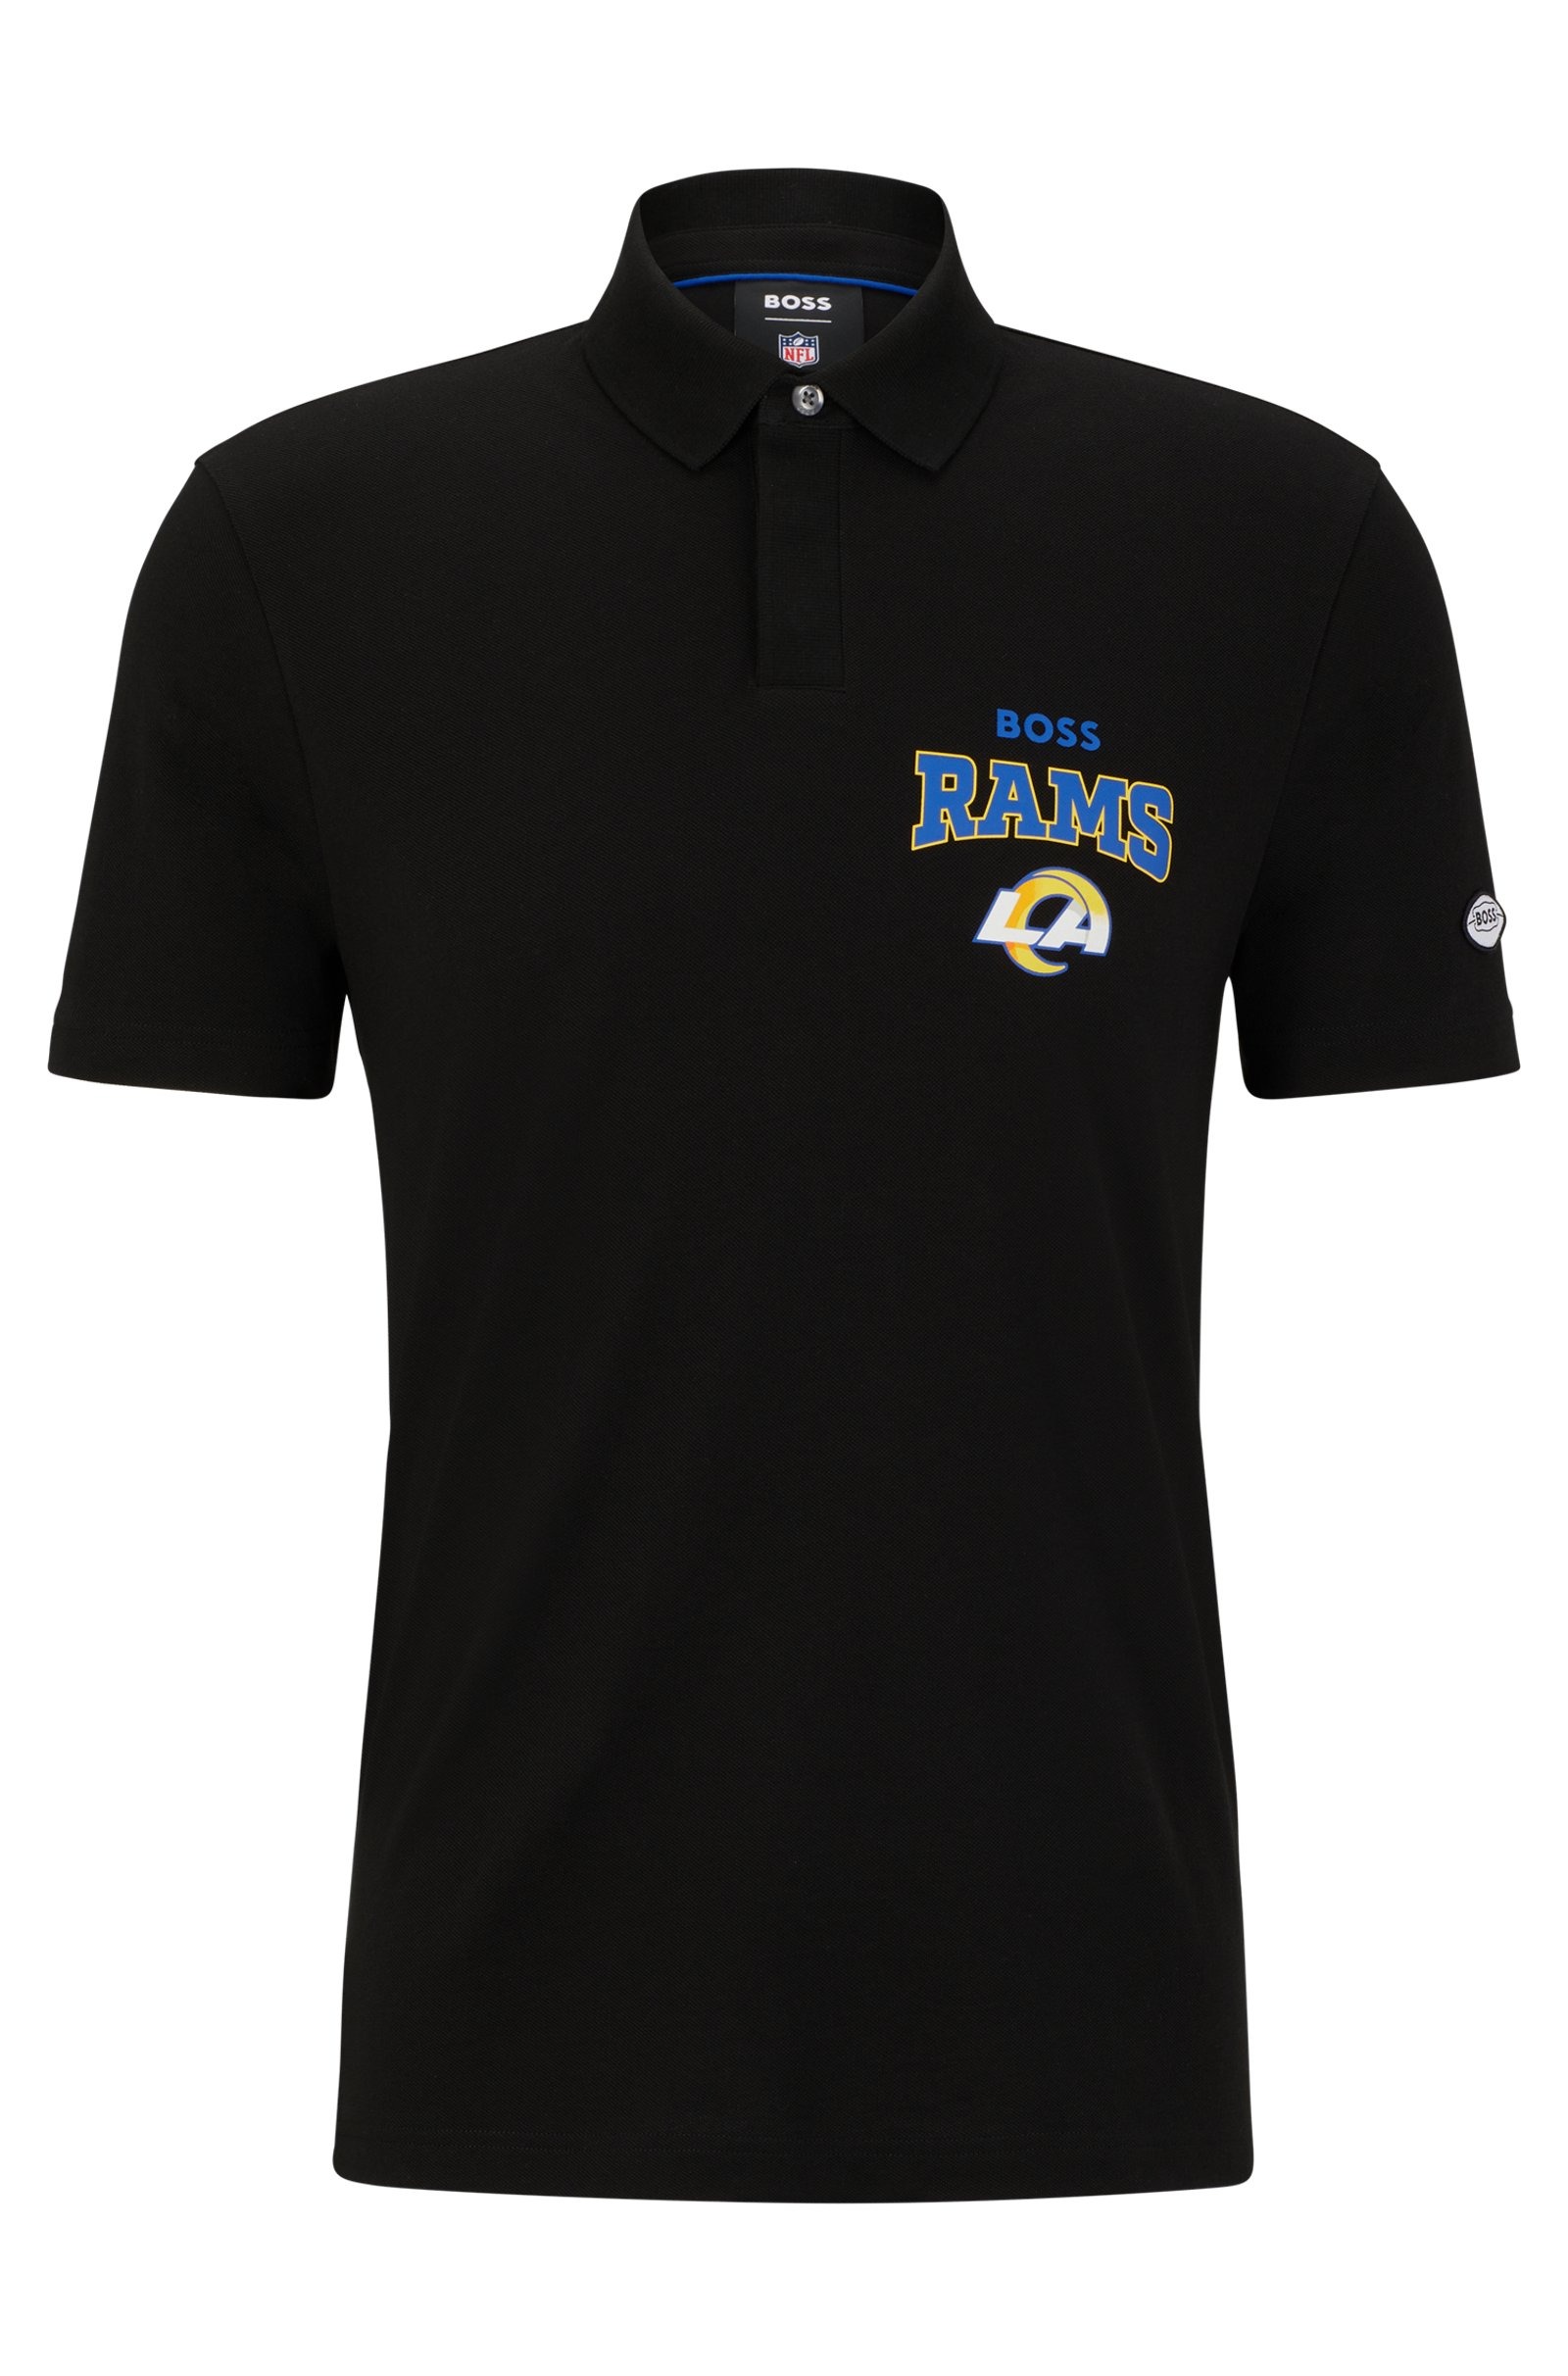 Футболка поло Boss X Nfl Cotton-piqué With Collaborative Branding Rams, черный футболка поло boss x nfl cotton piqué with collaborative branding rams черный